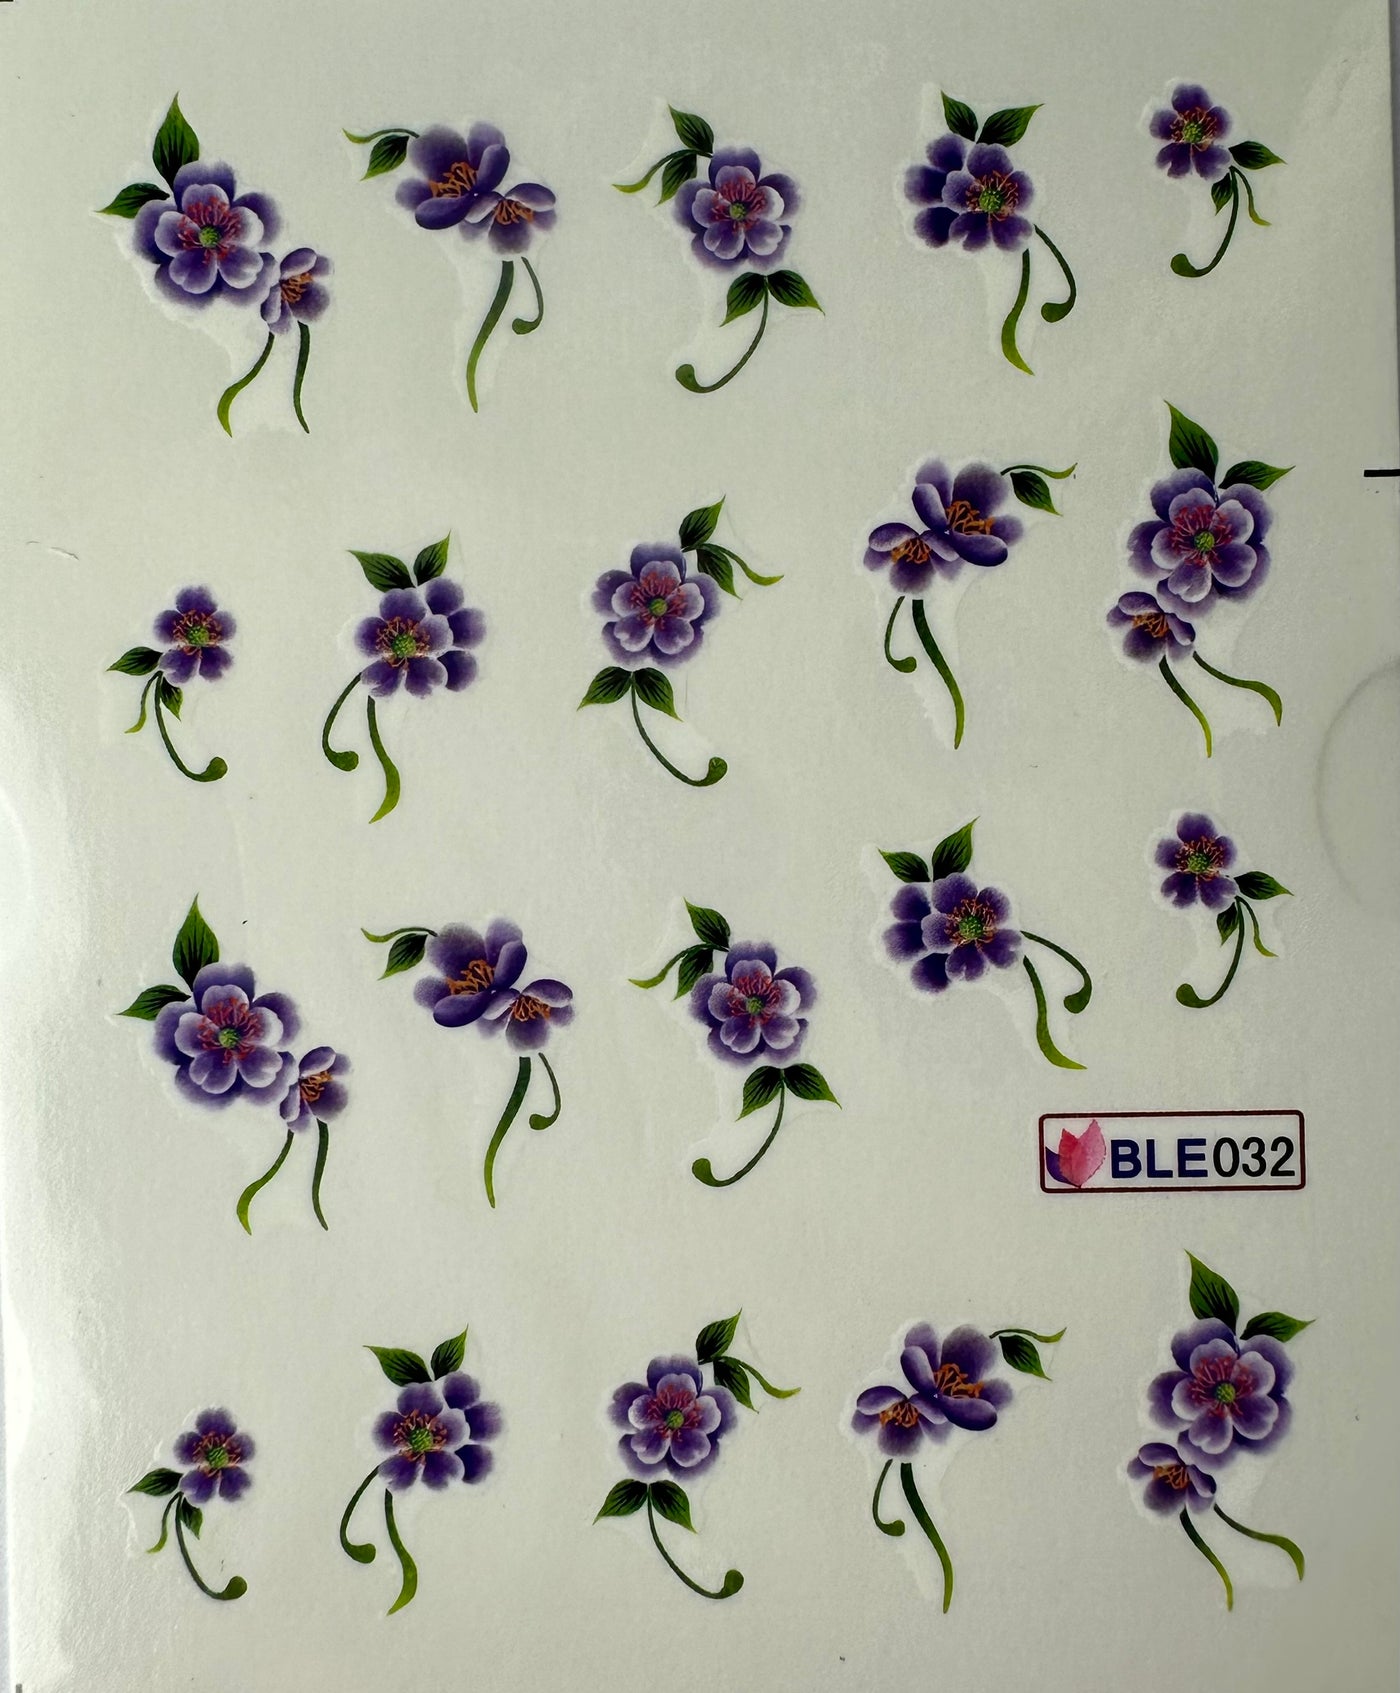 Flower Power 13 - Wattertattoo Sticker